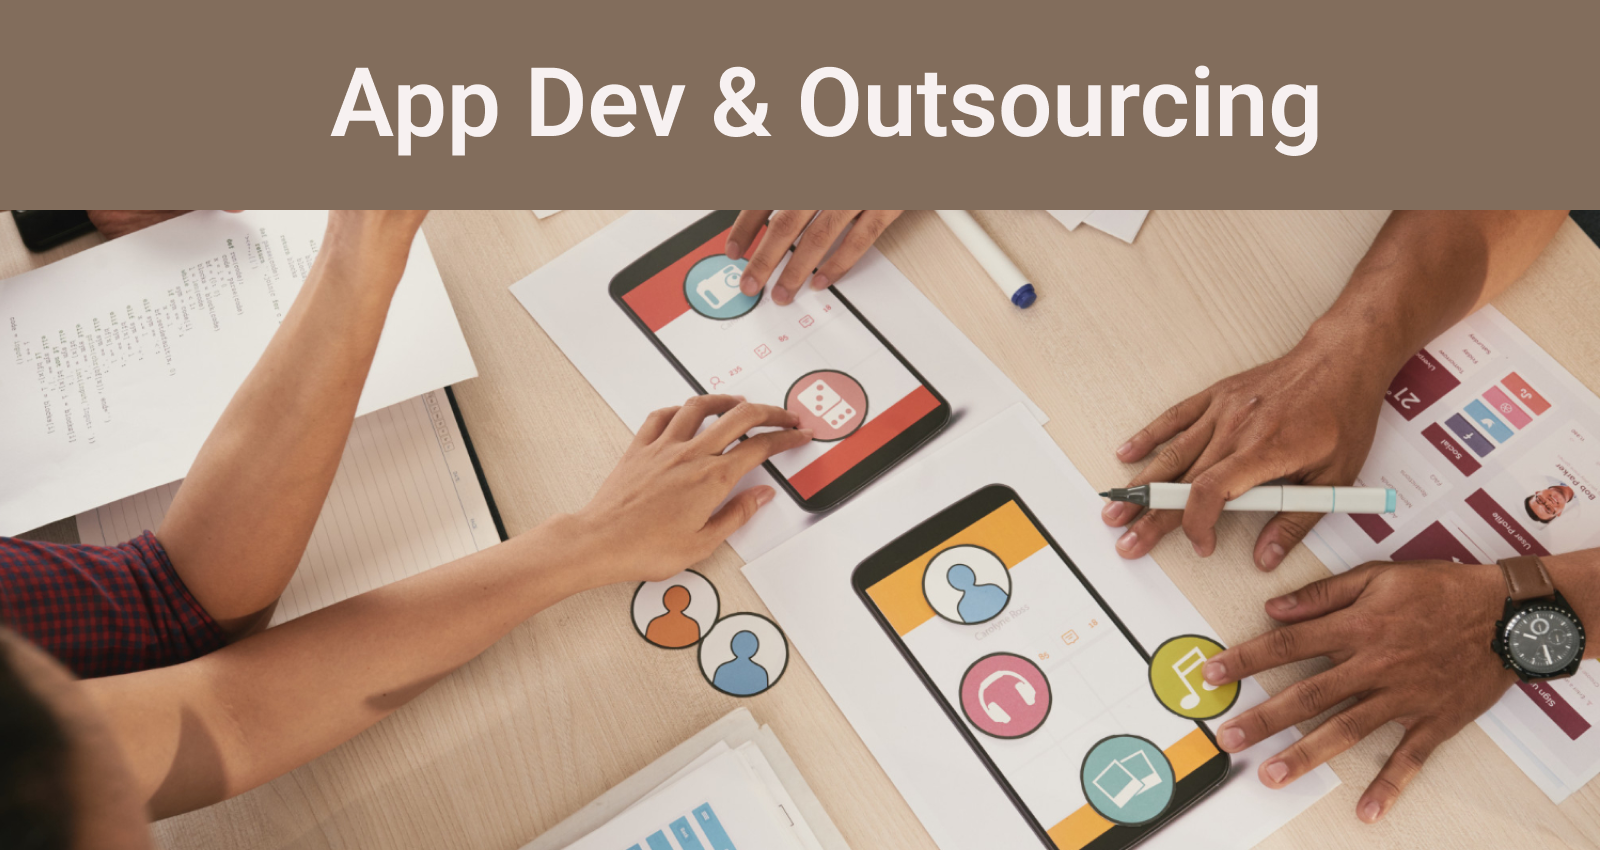 App Development, Cost of App Development, Mobile App Development, App Outsourcing, Web Development, Web App Development